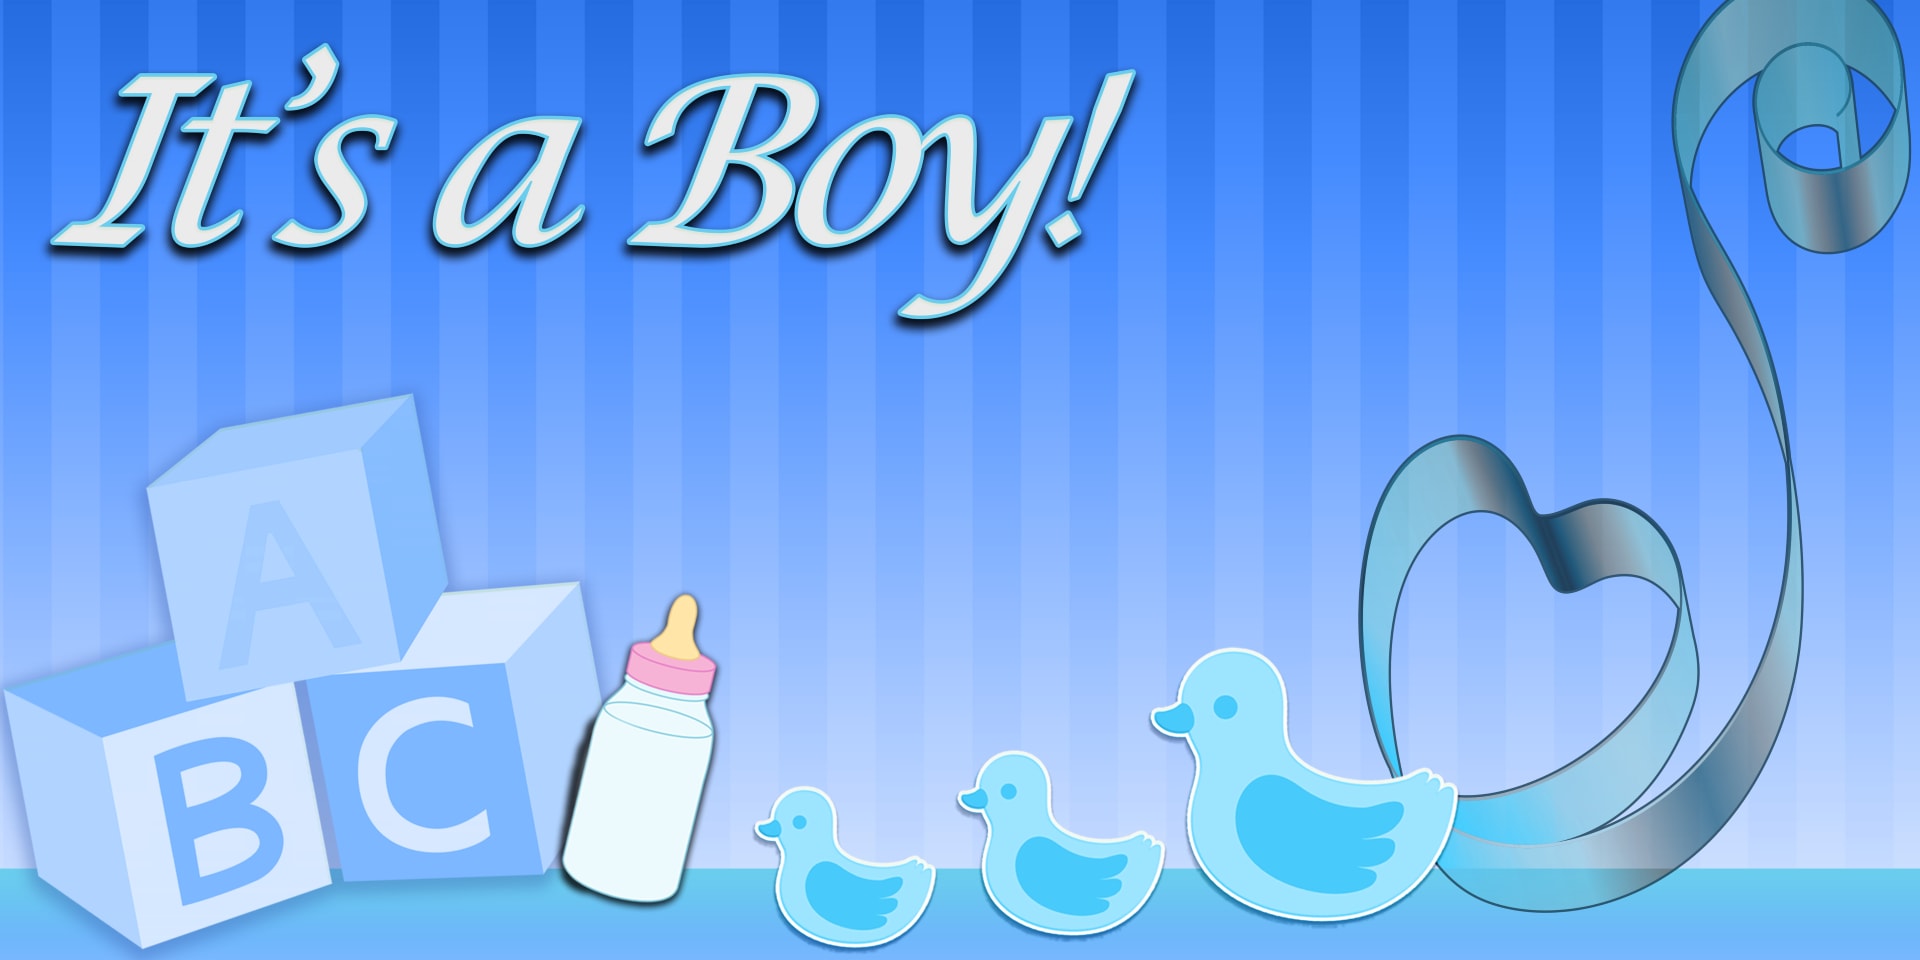 its a boy baby shower banner